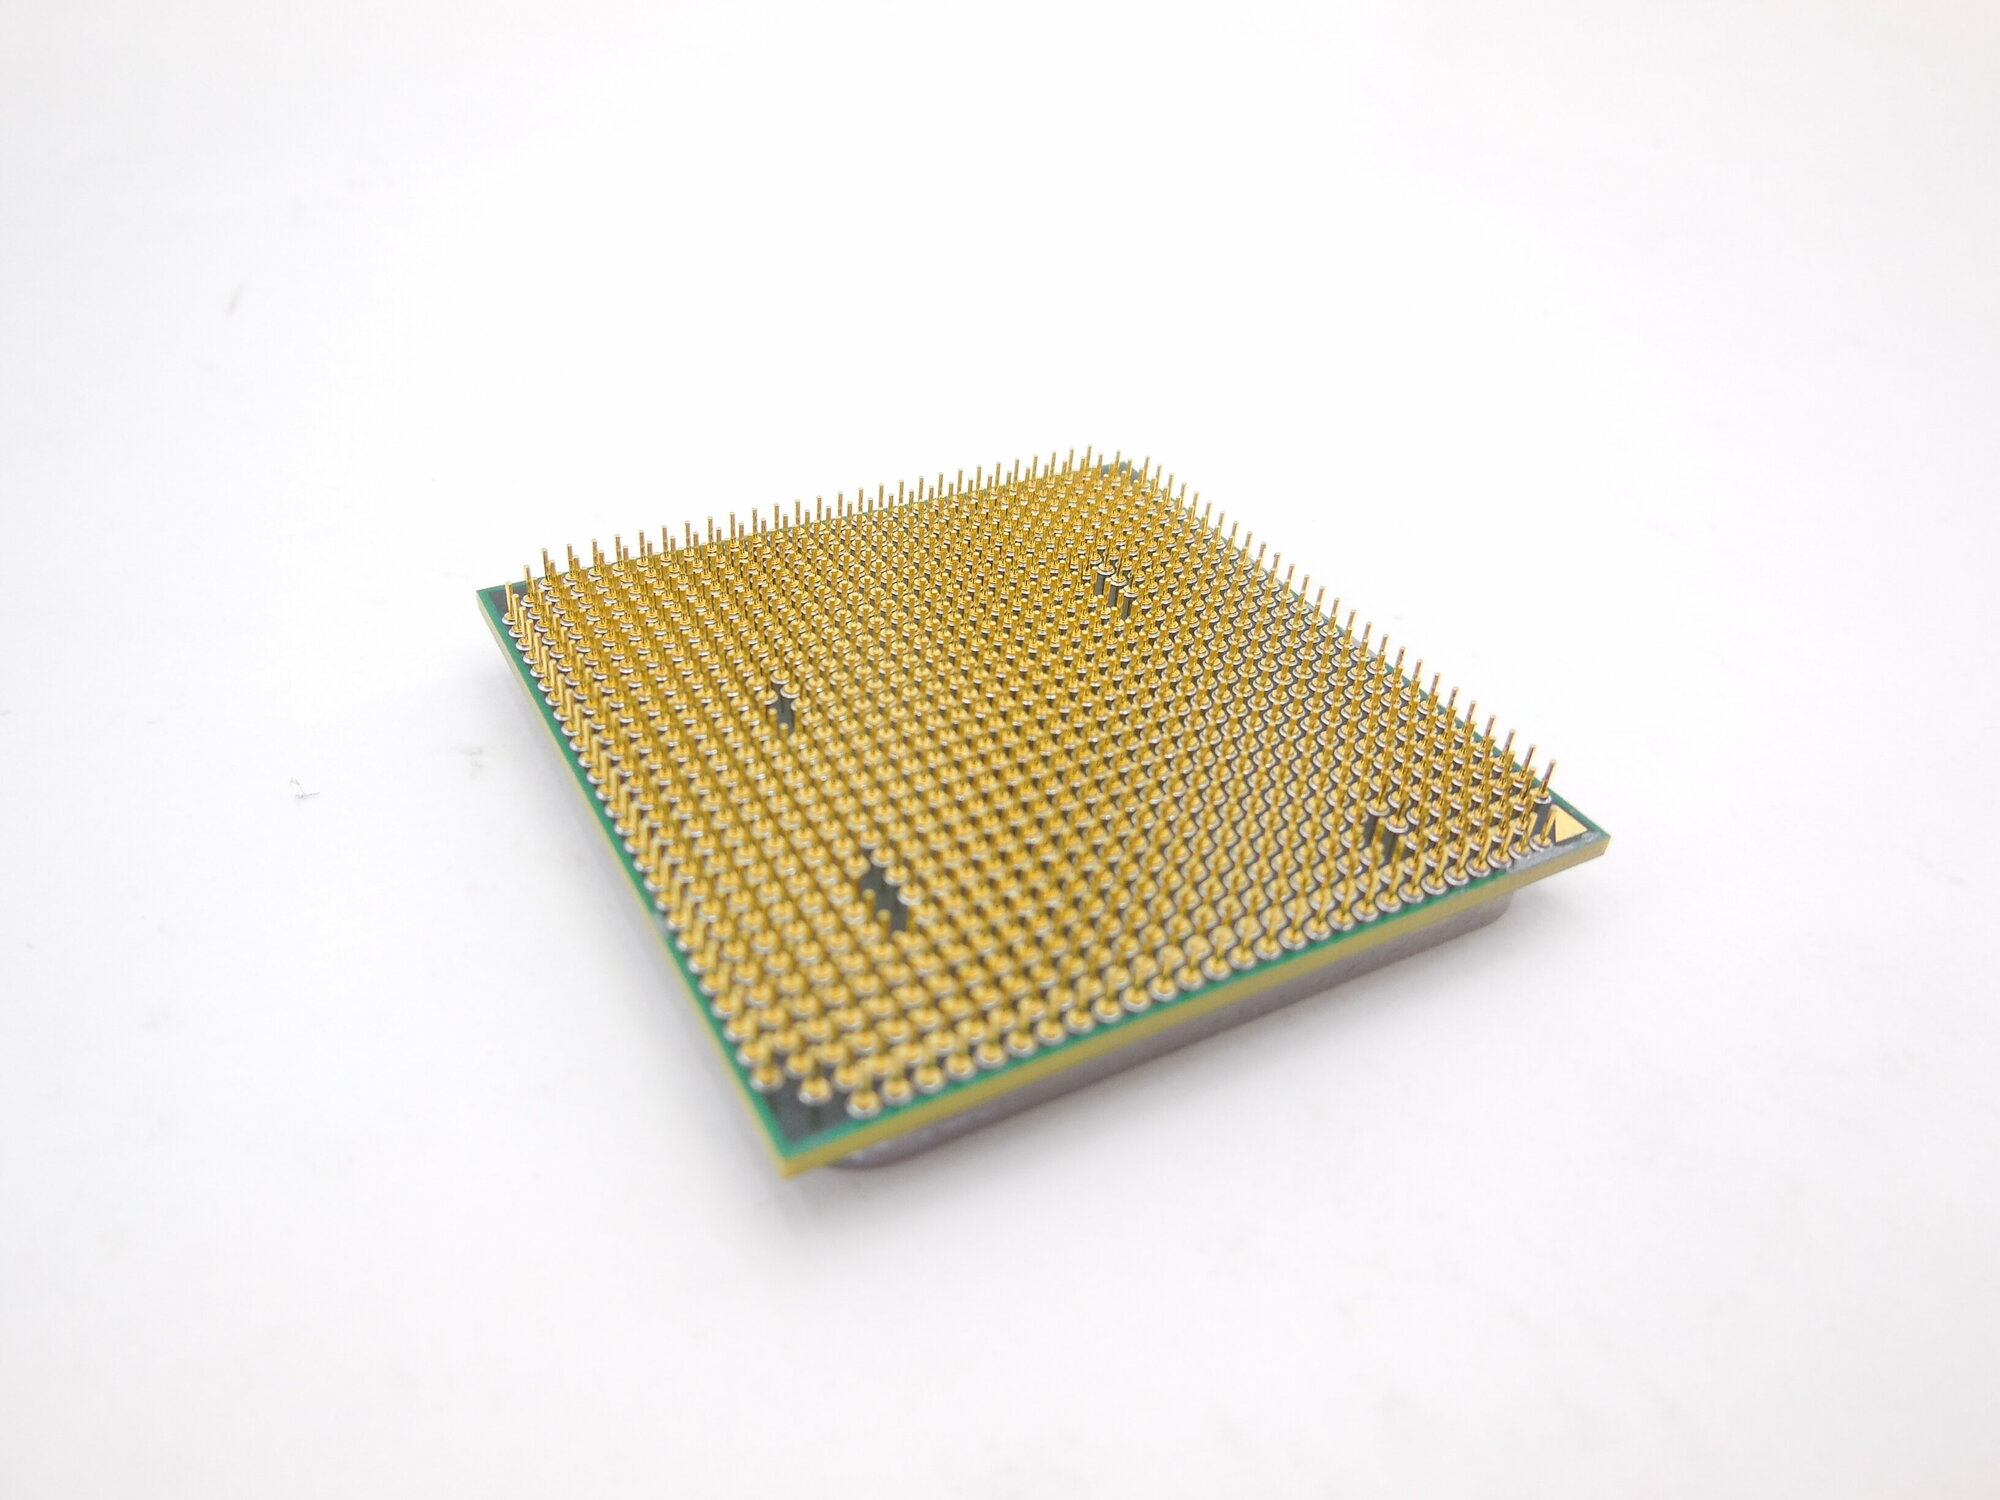 Процессор AMD Phenom II X6 1055T AM3 6 x 2800 МГц